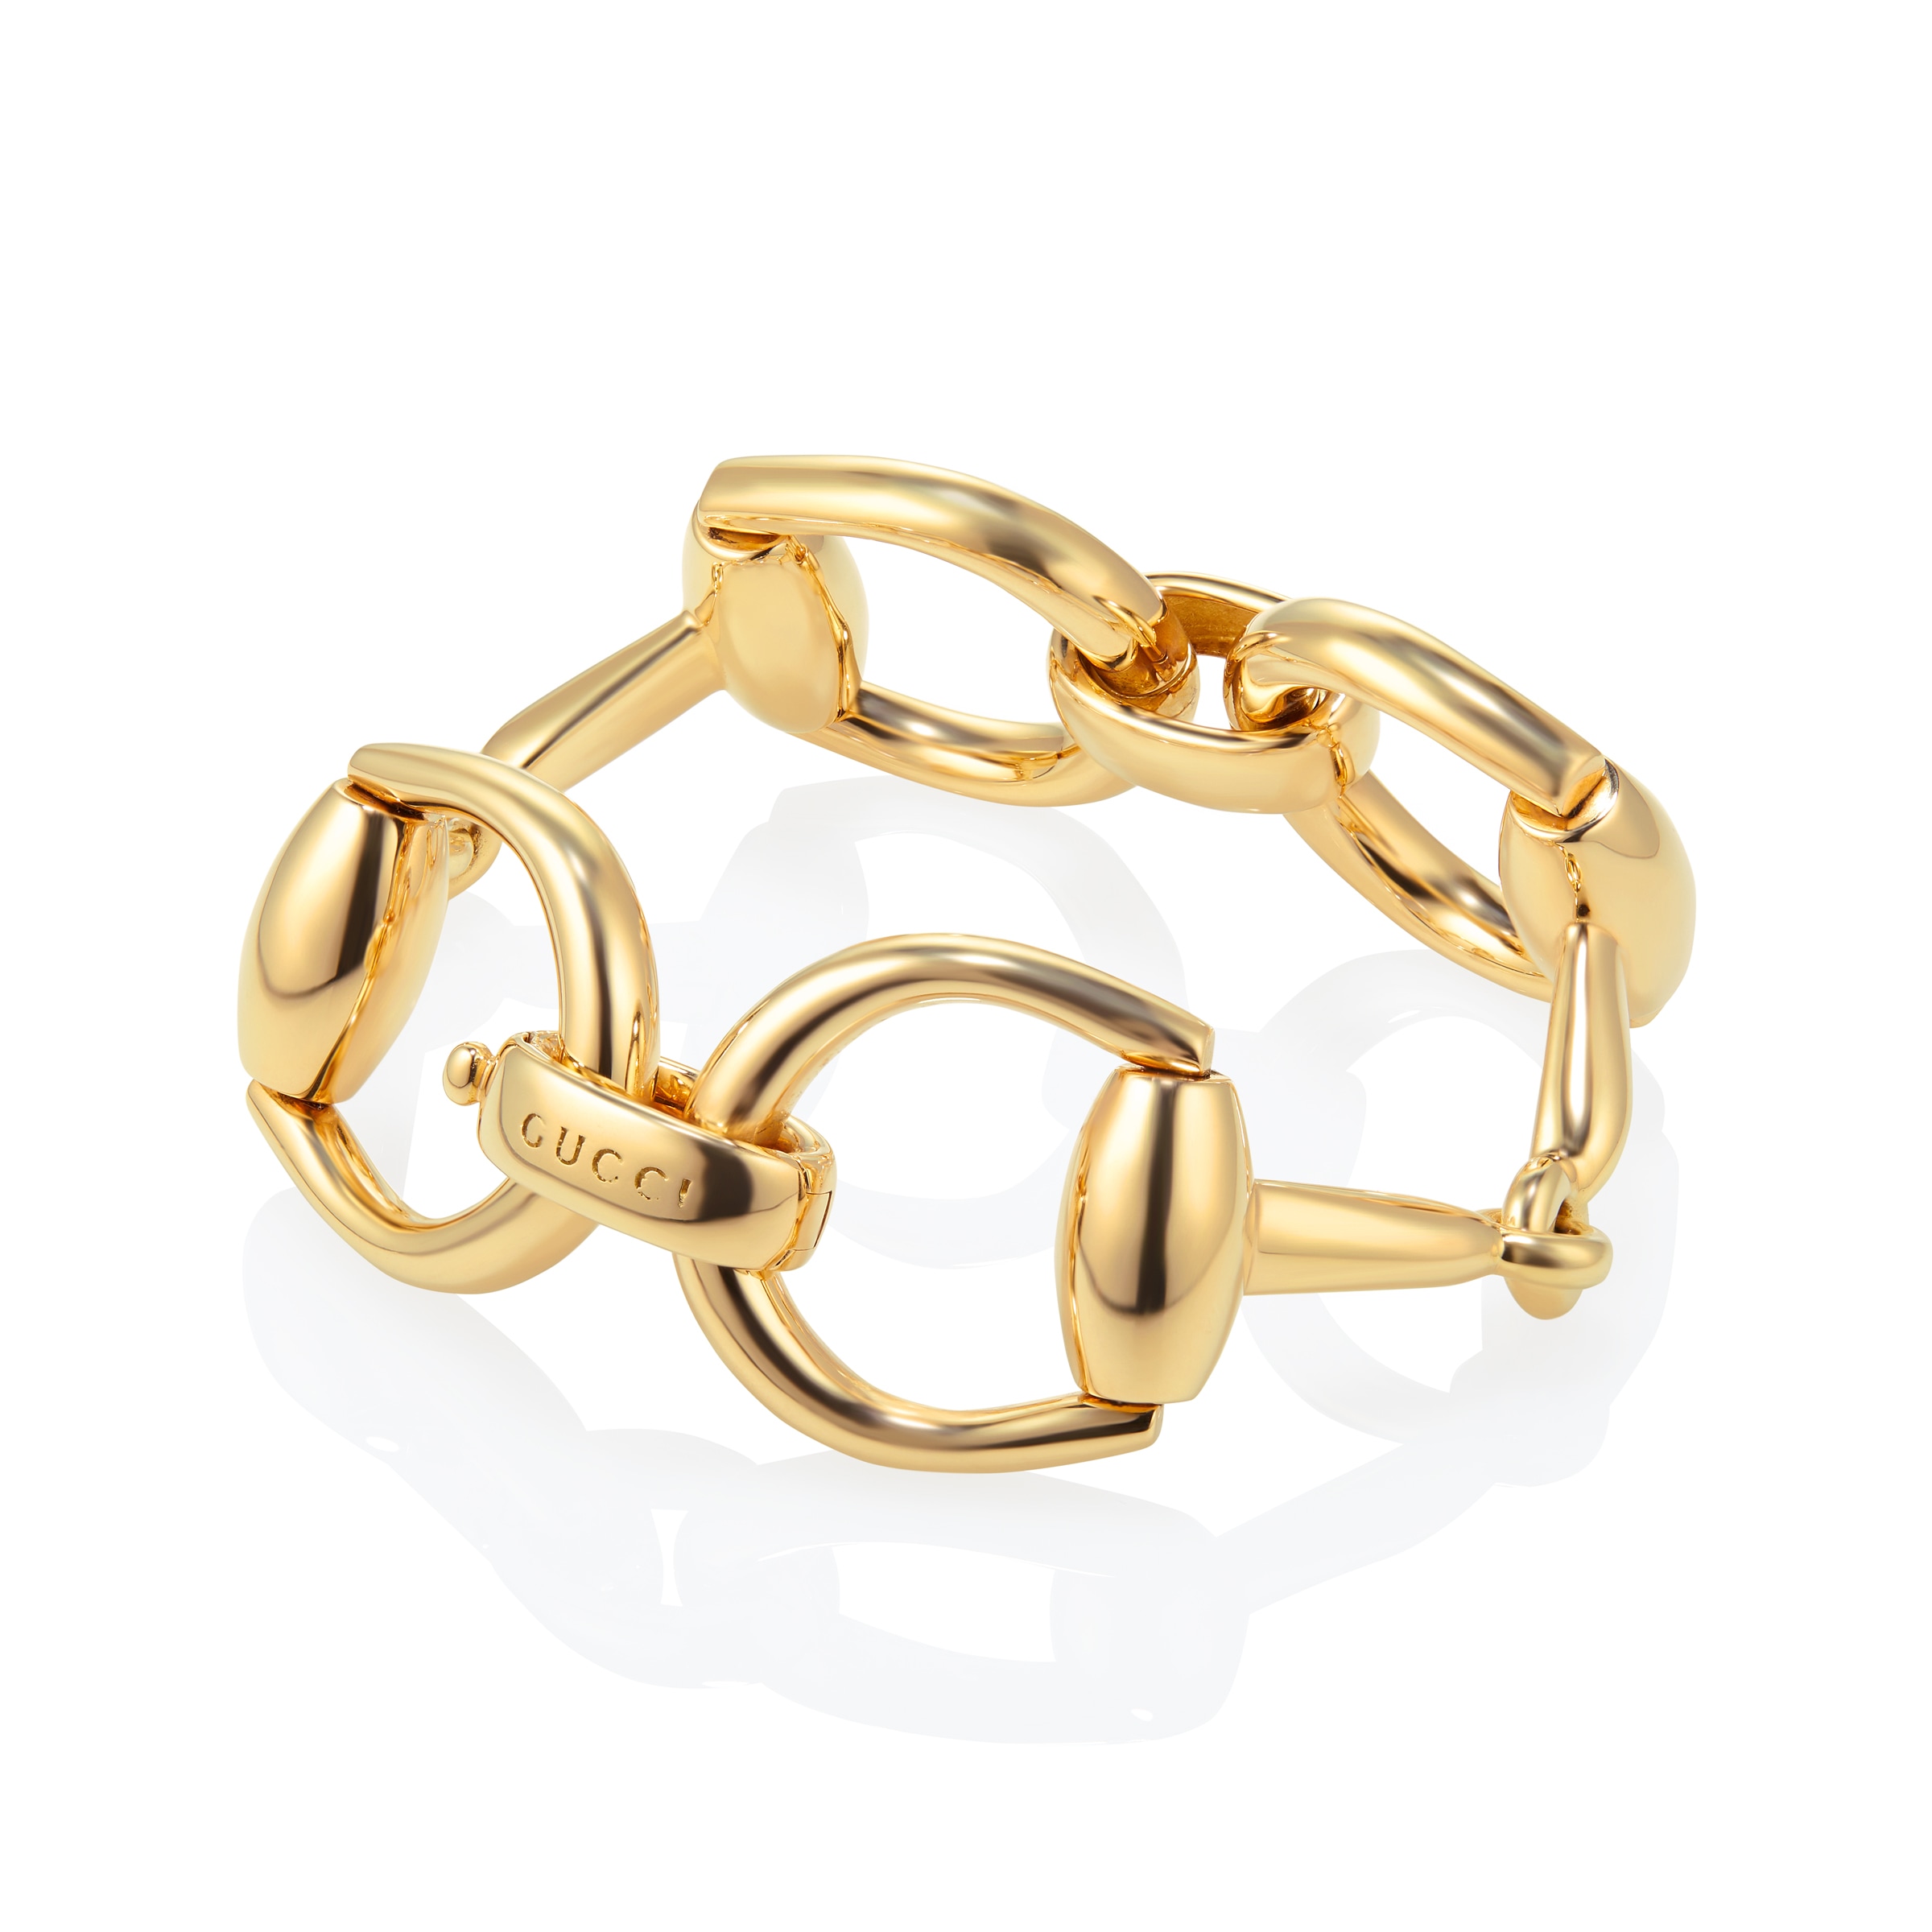 Gucci Enamel Horsebit Bracelet - Gold, Sterling Silver Link, Bracelets -  GUC110652 | The RealReal